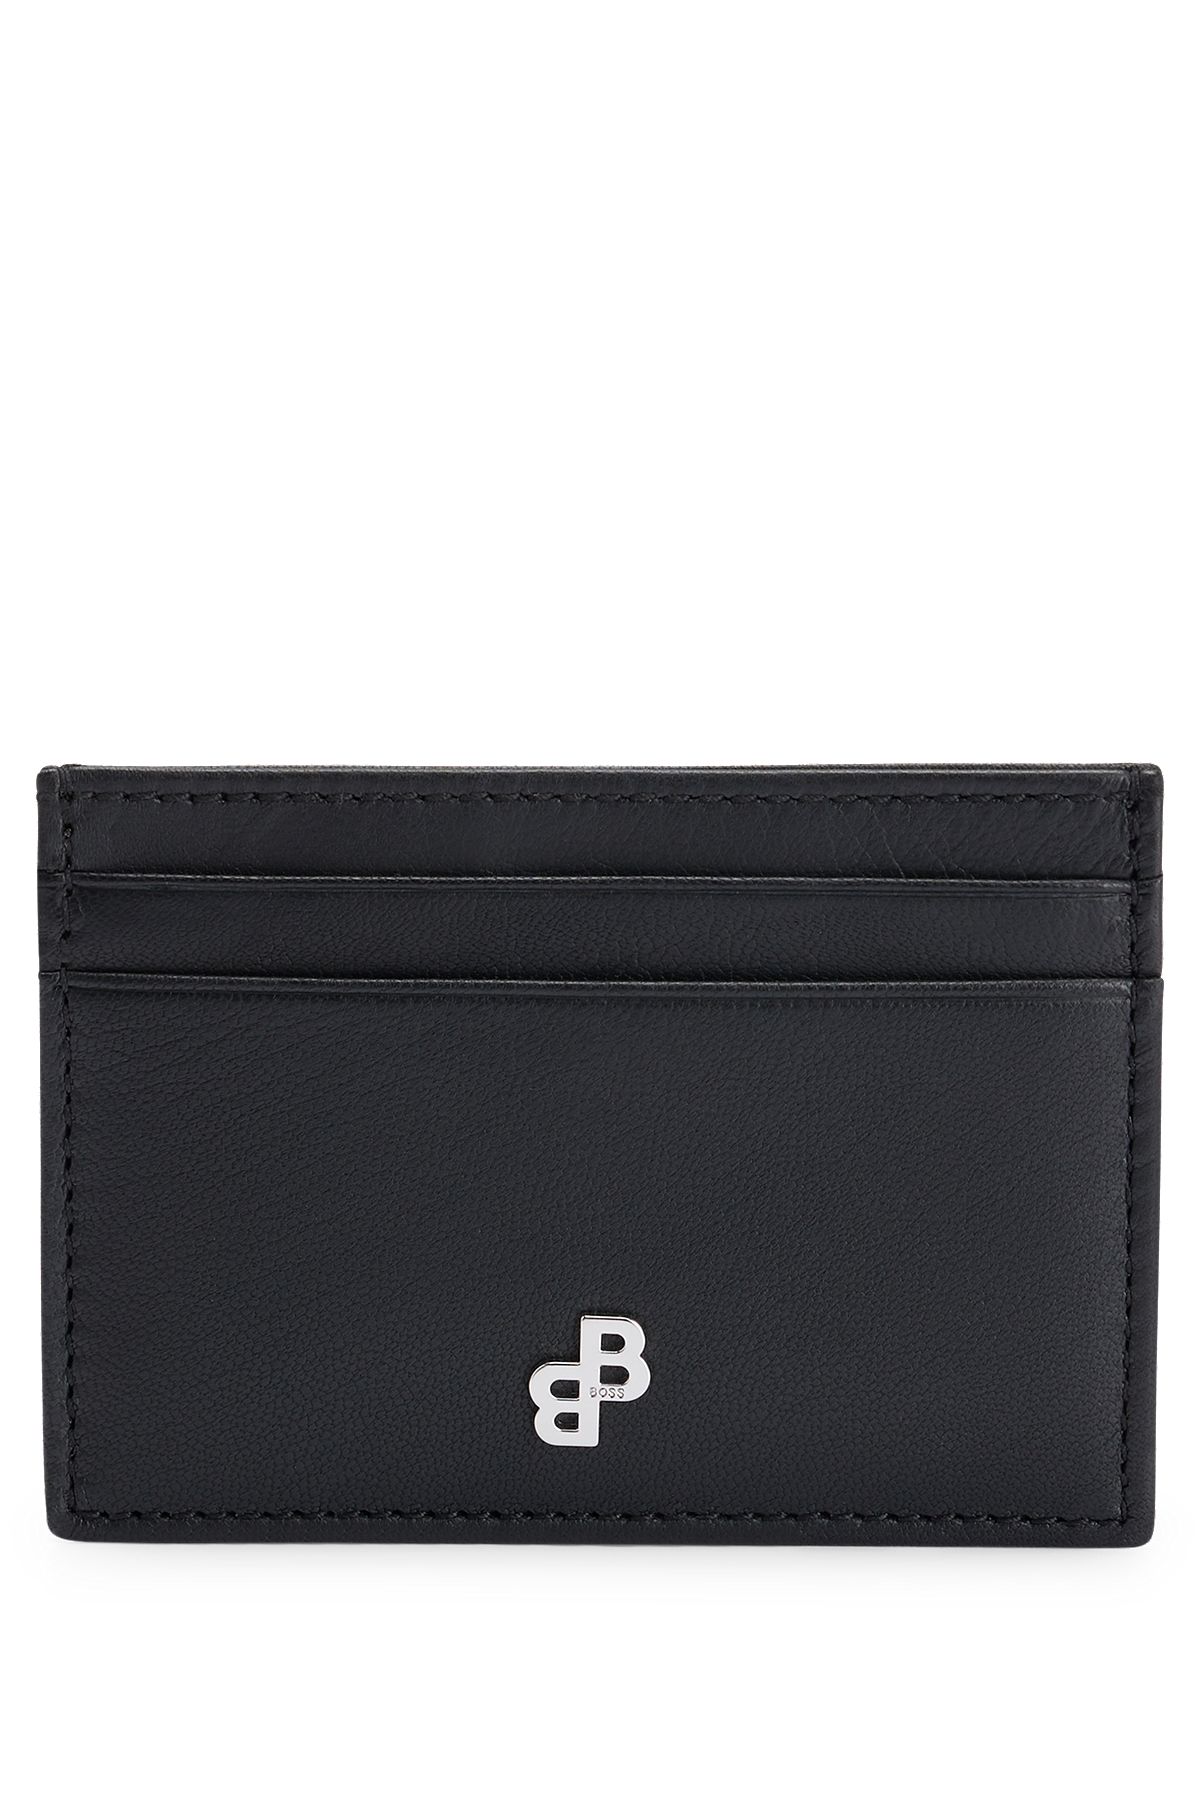 Matte-leather card holder with monogram hardware trim, Black